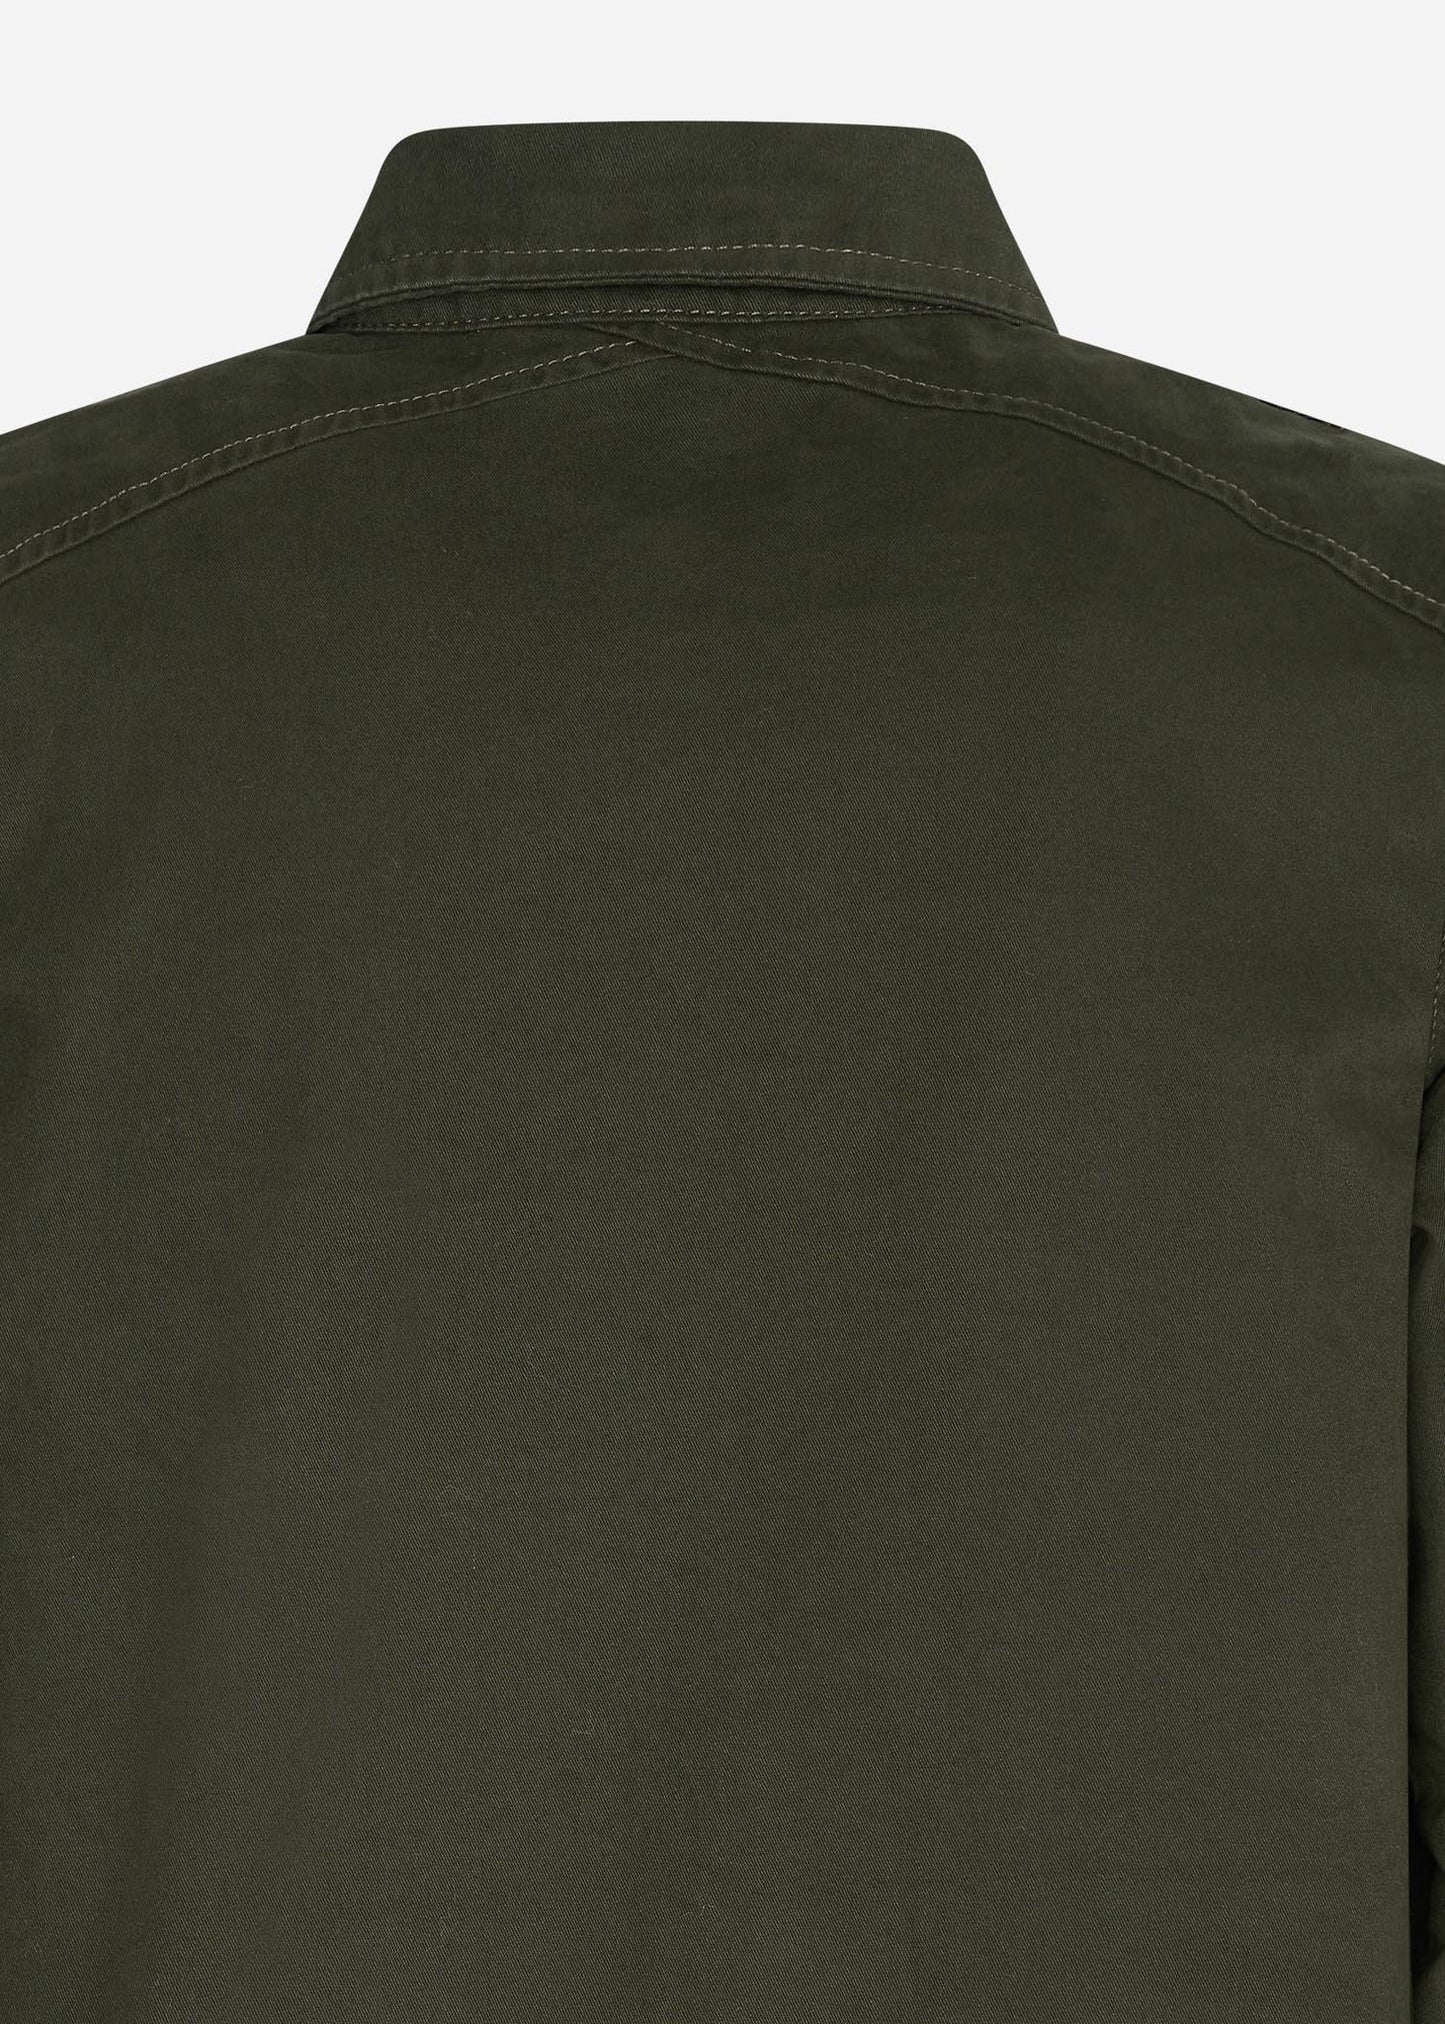 MA.Strum Overshirts  Two pocket overshirt - oil slick 